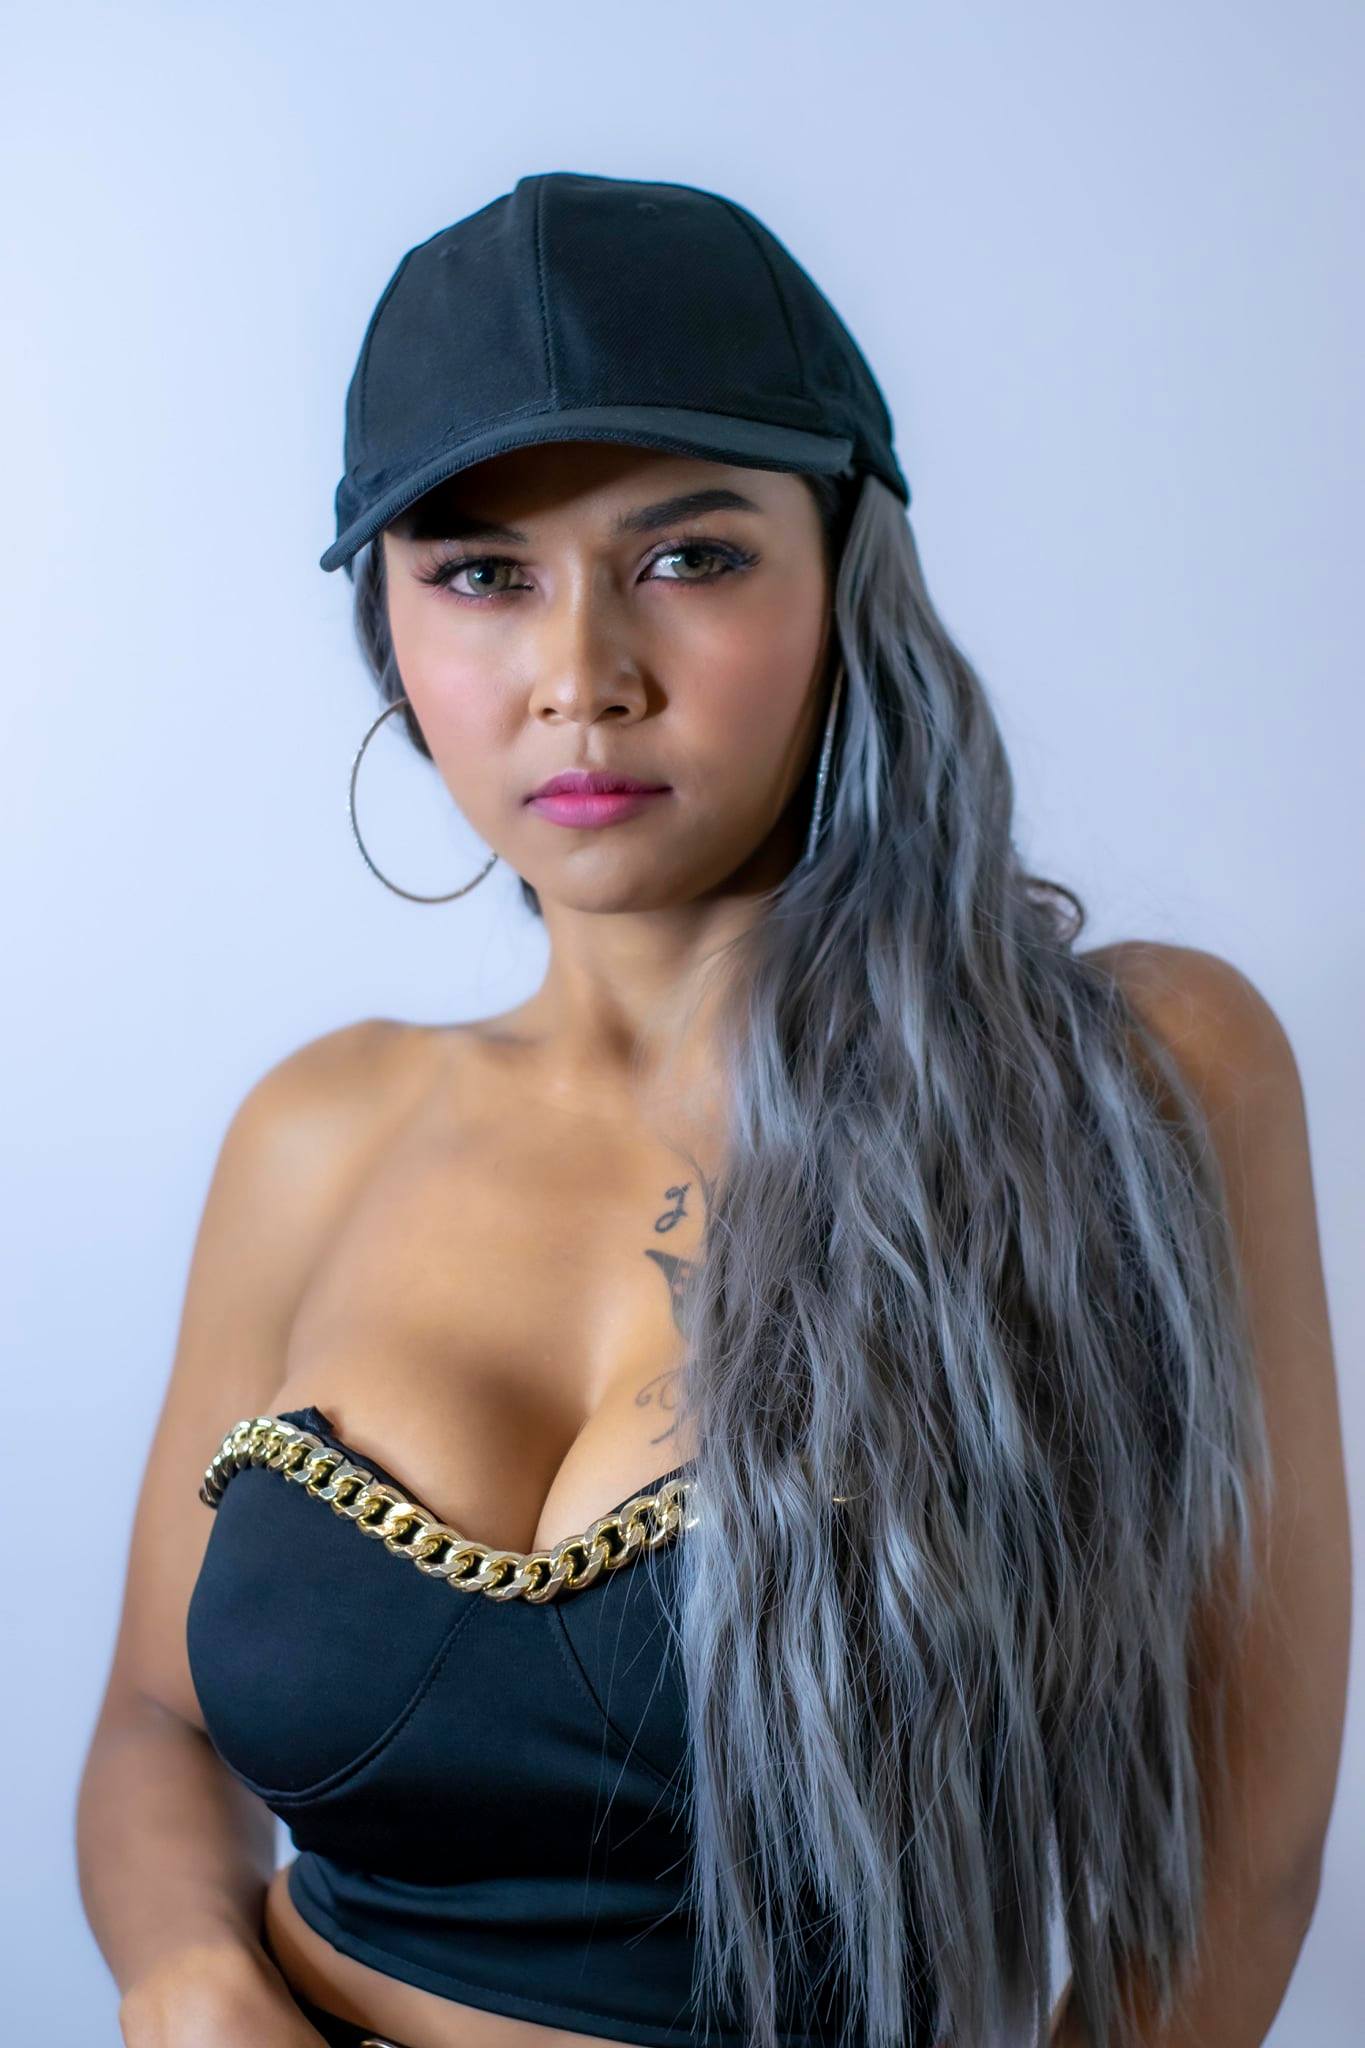 Mean looking asian girl wearing a cap